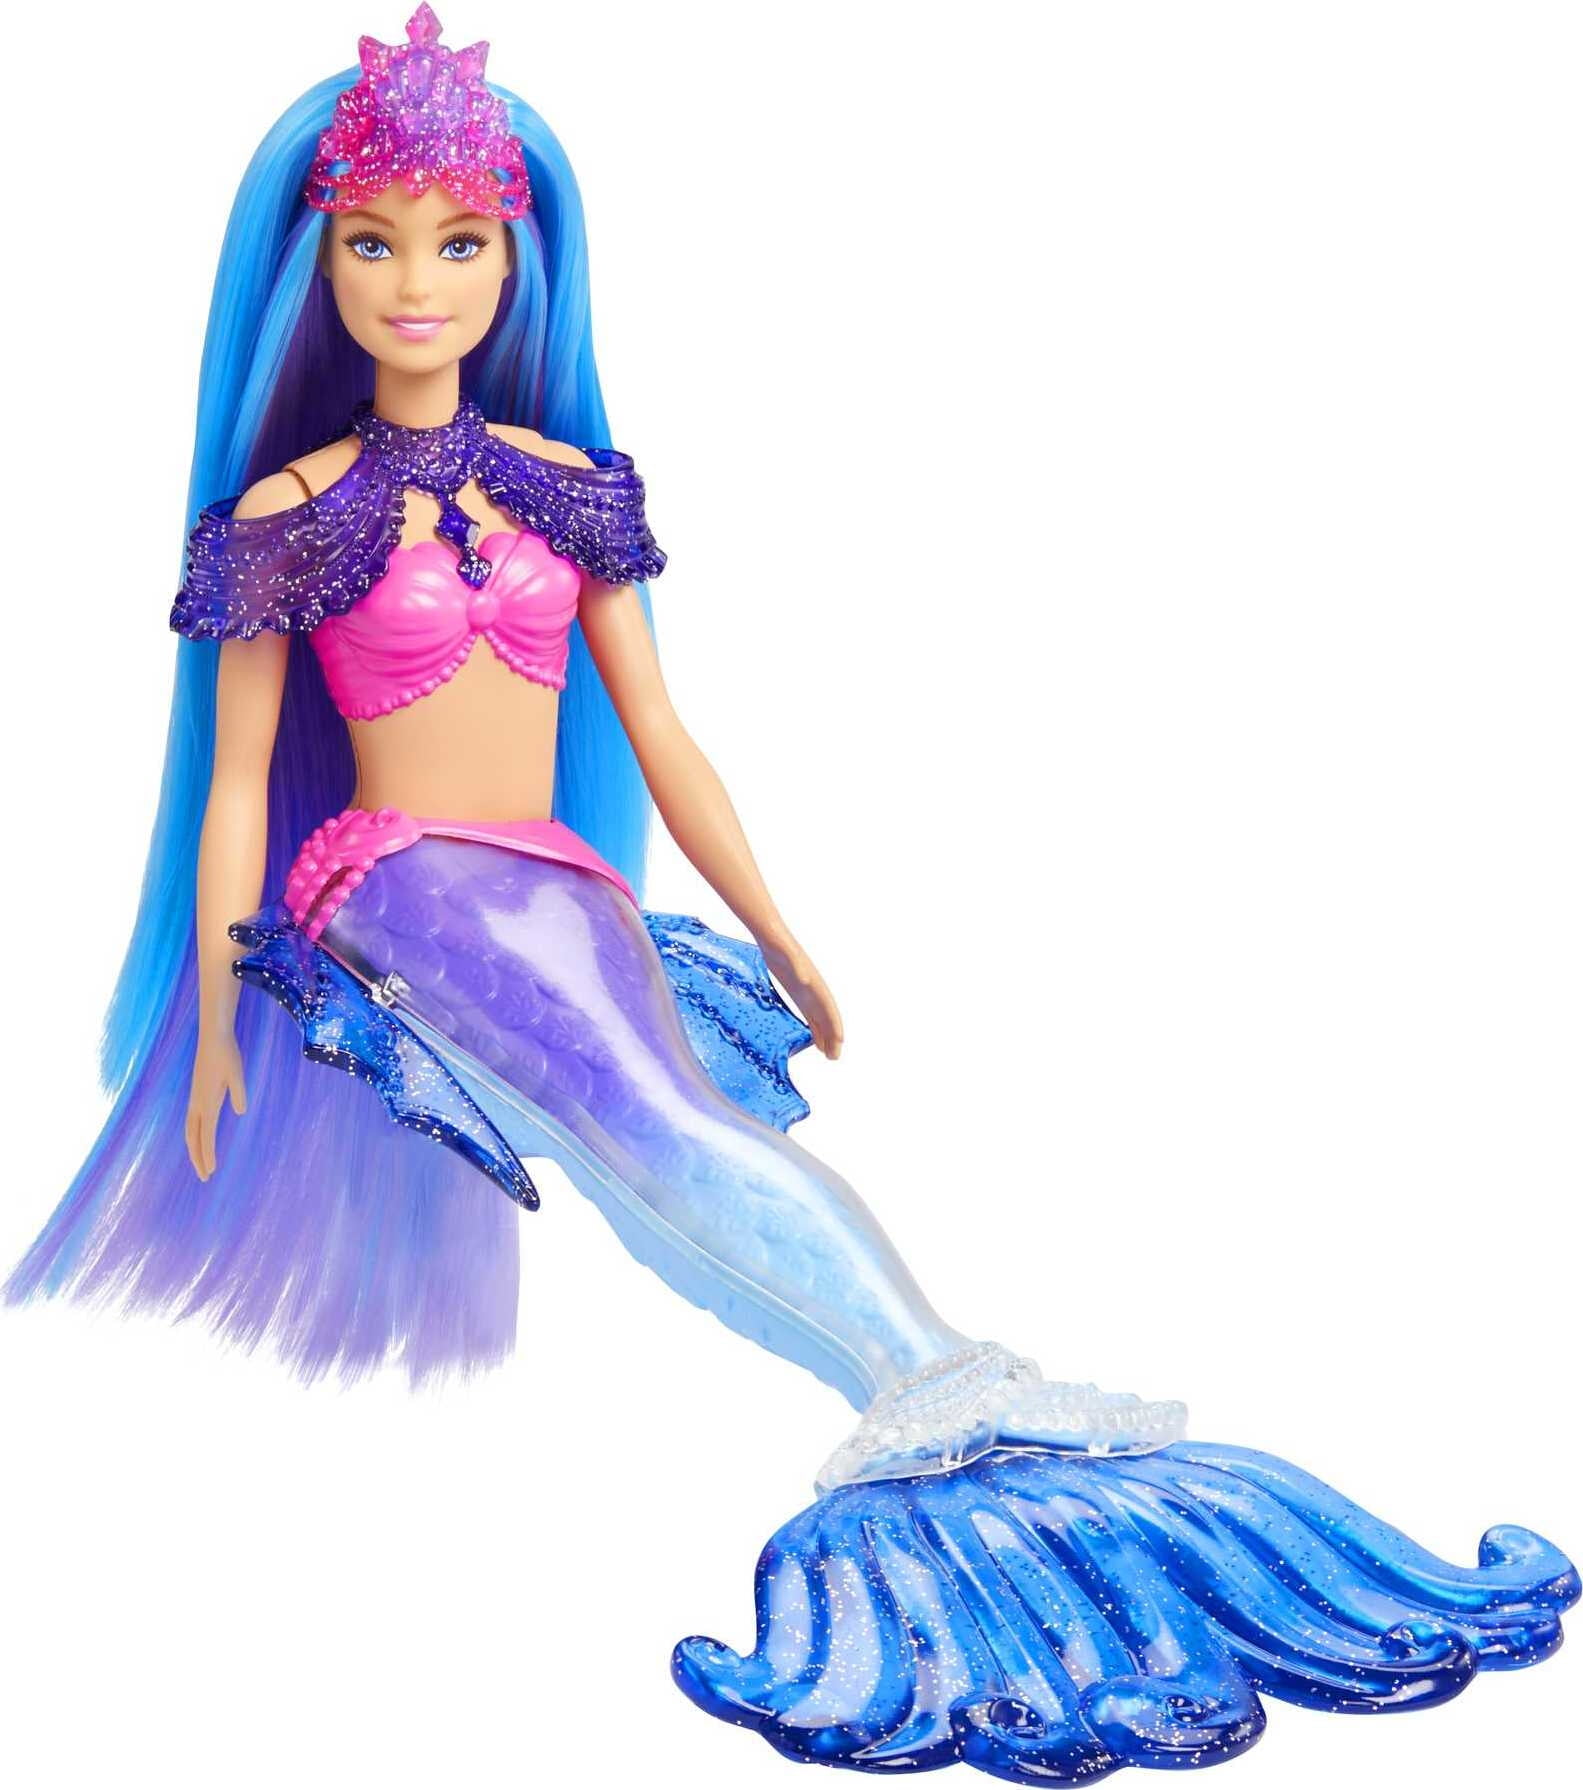 Barbie Mermaid 'Malibu' Doll with Pet and Accessories - Walmart.com